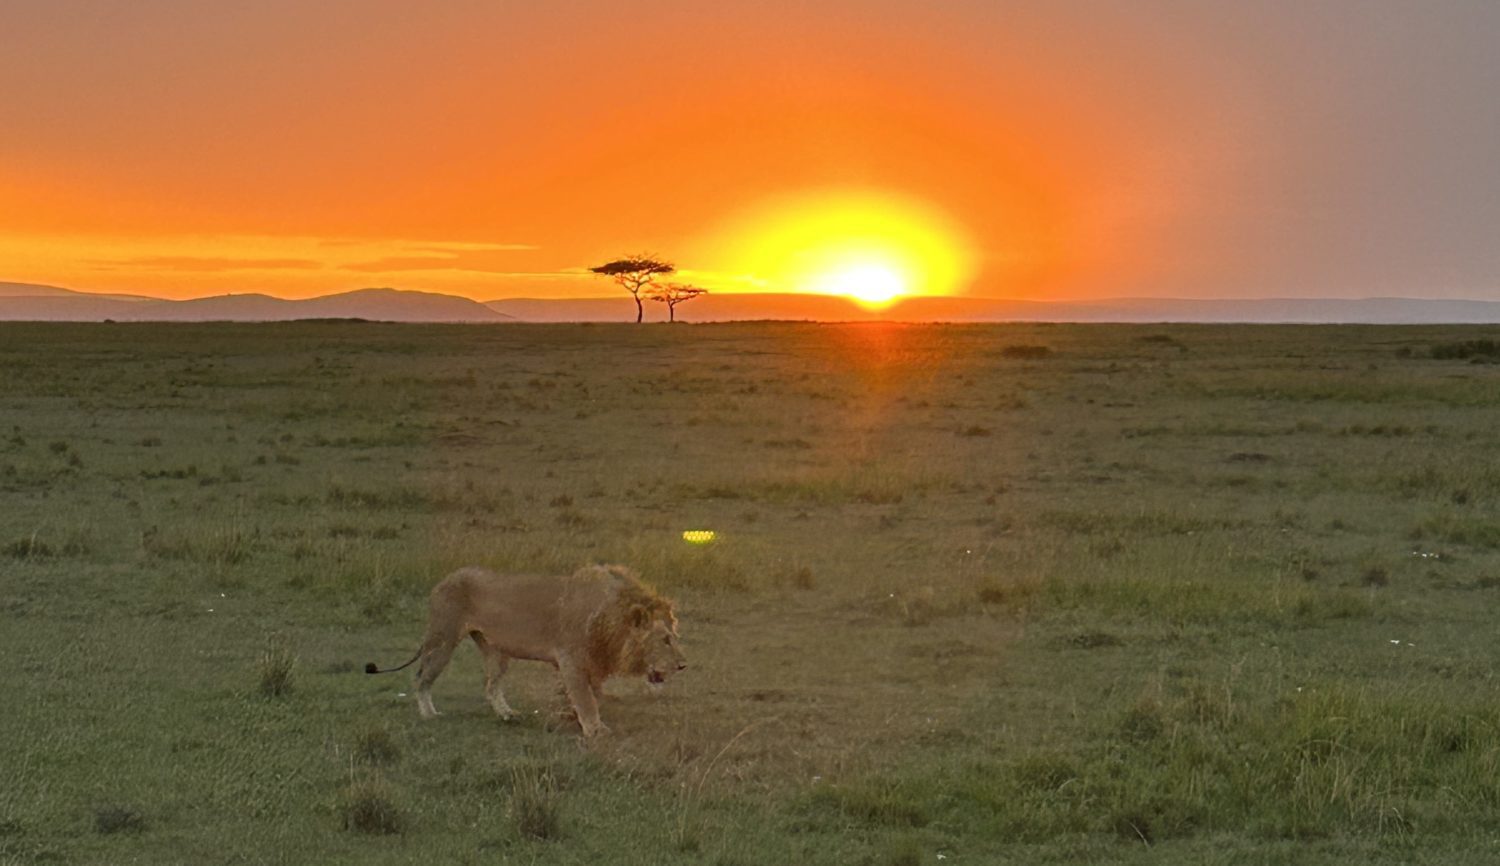 A lion walking across a grass-covered field